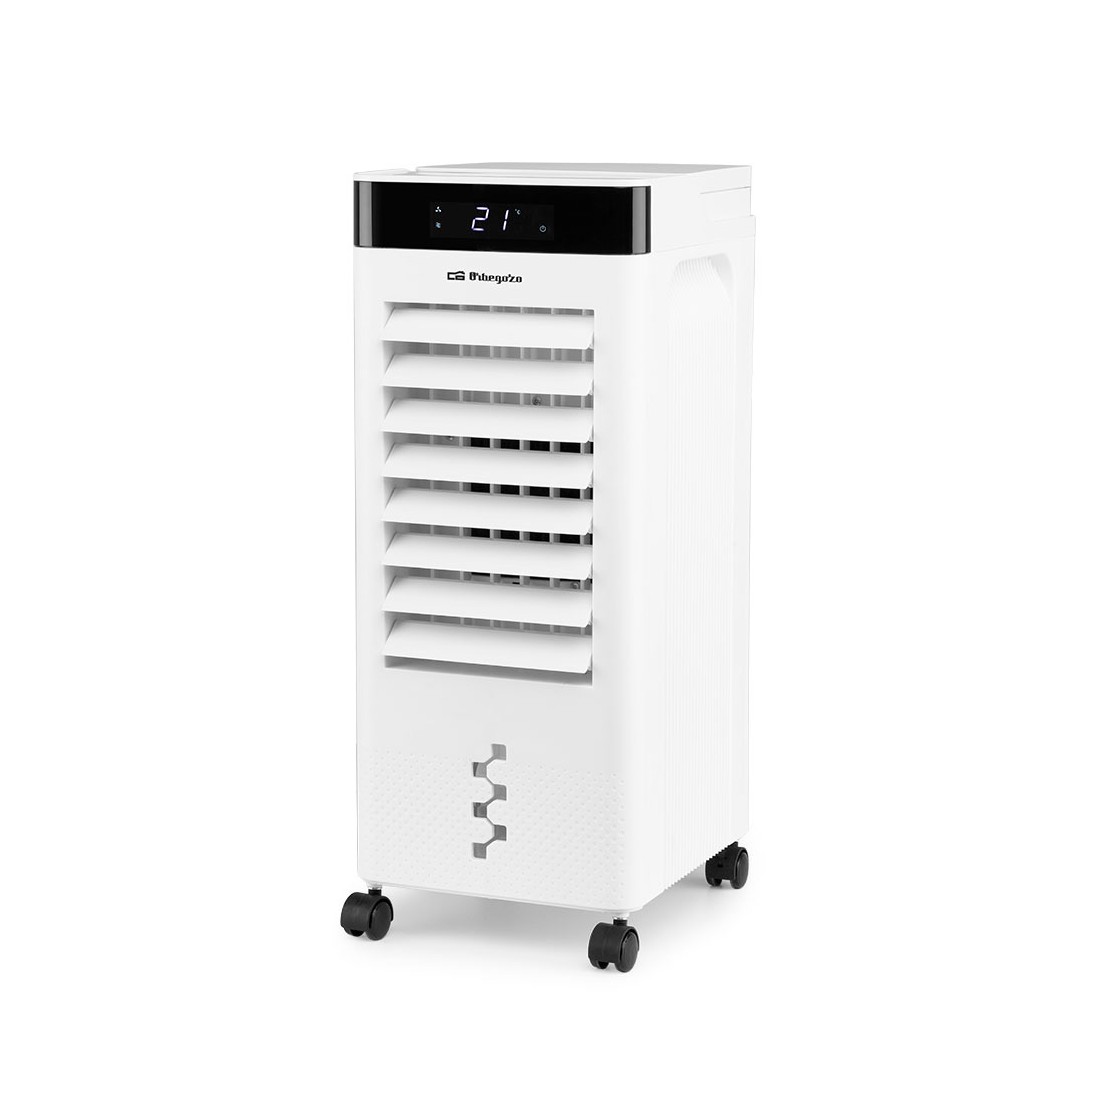 Climatizador - Orbegozo AIR37, 6 Litros, 65 W, Digital, Blanco